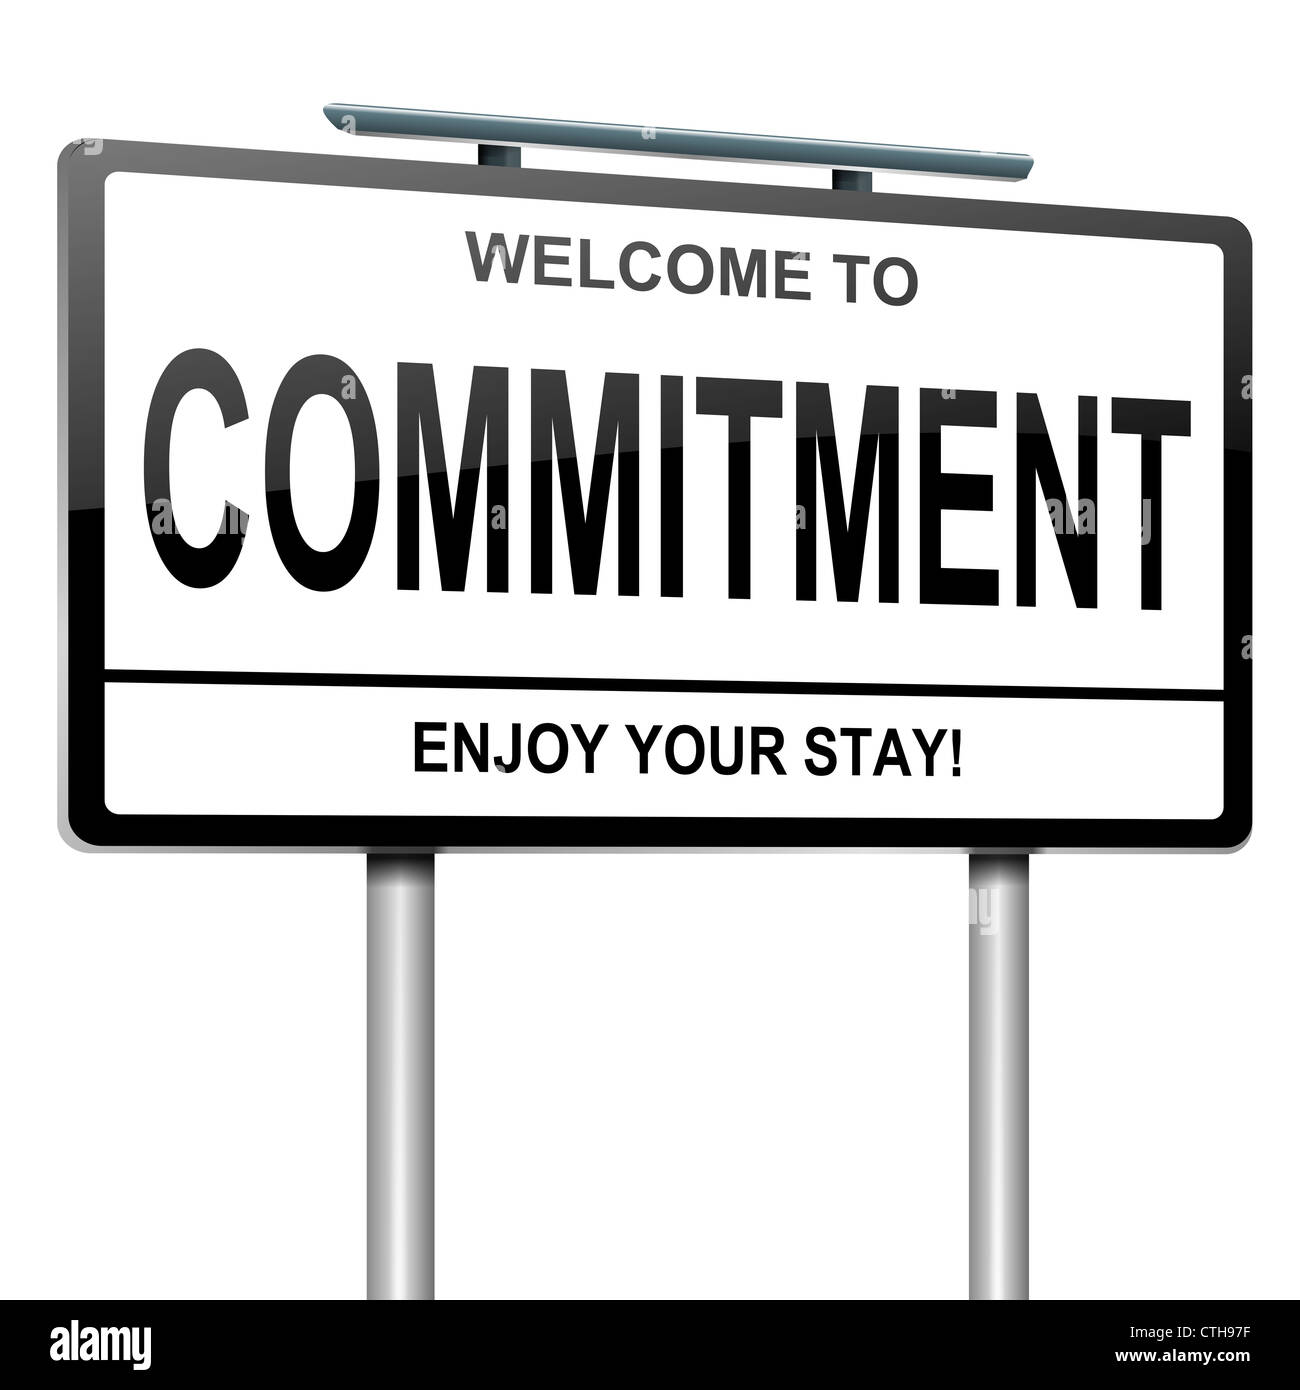 Commitment concept. Stock Photo